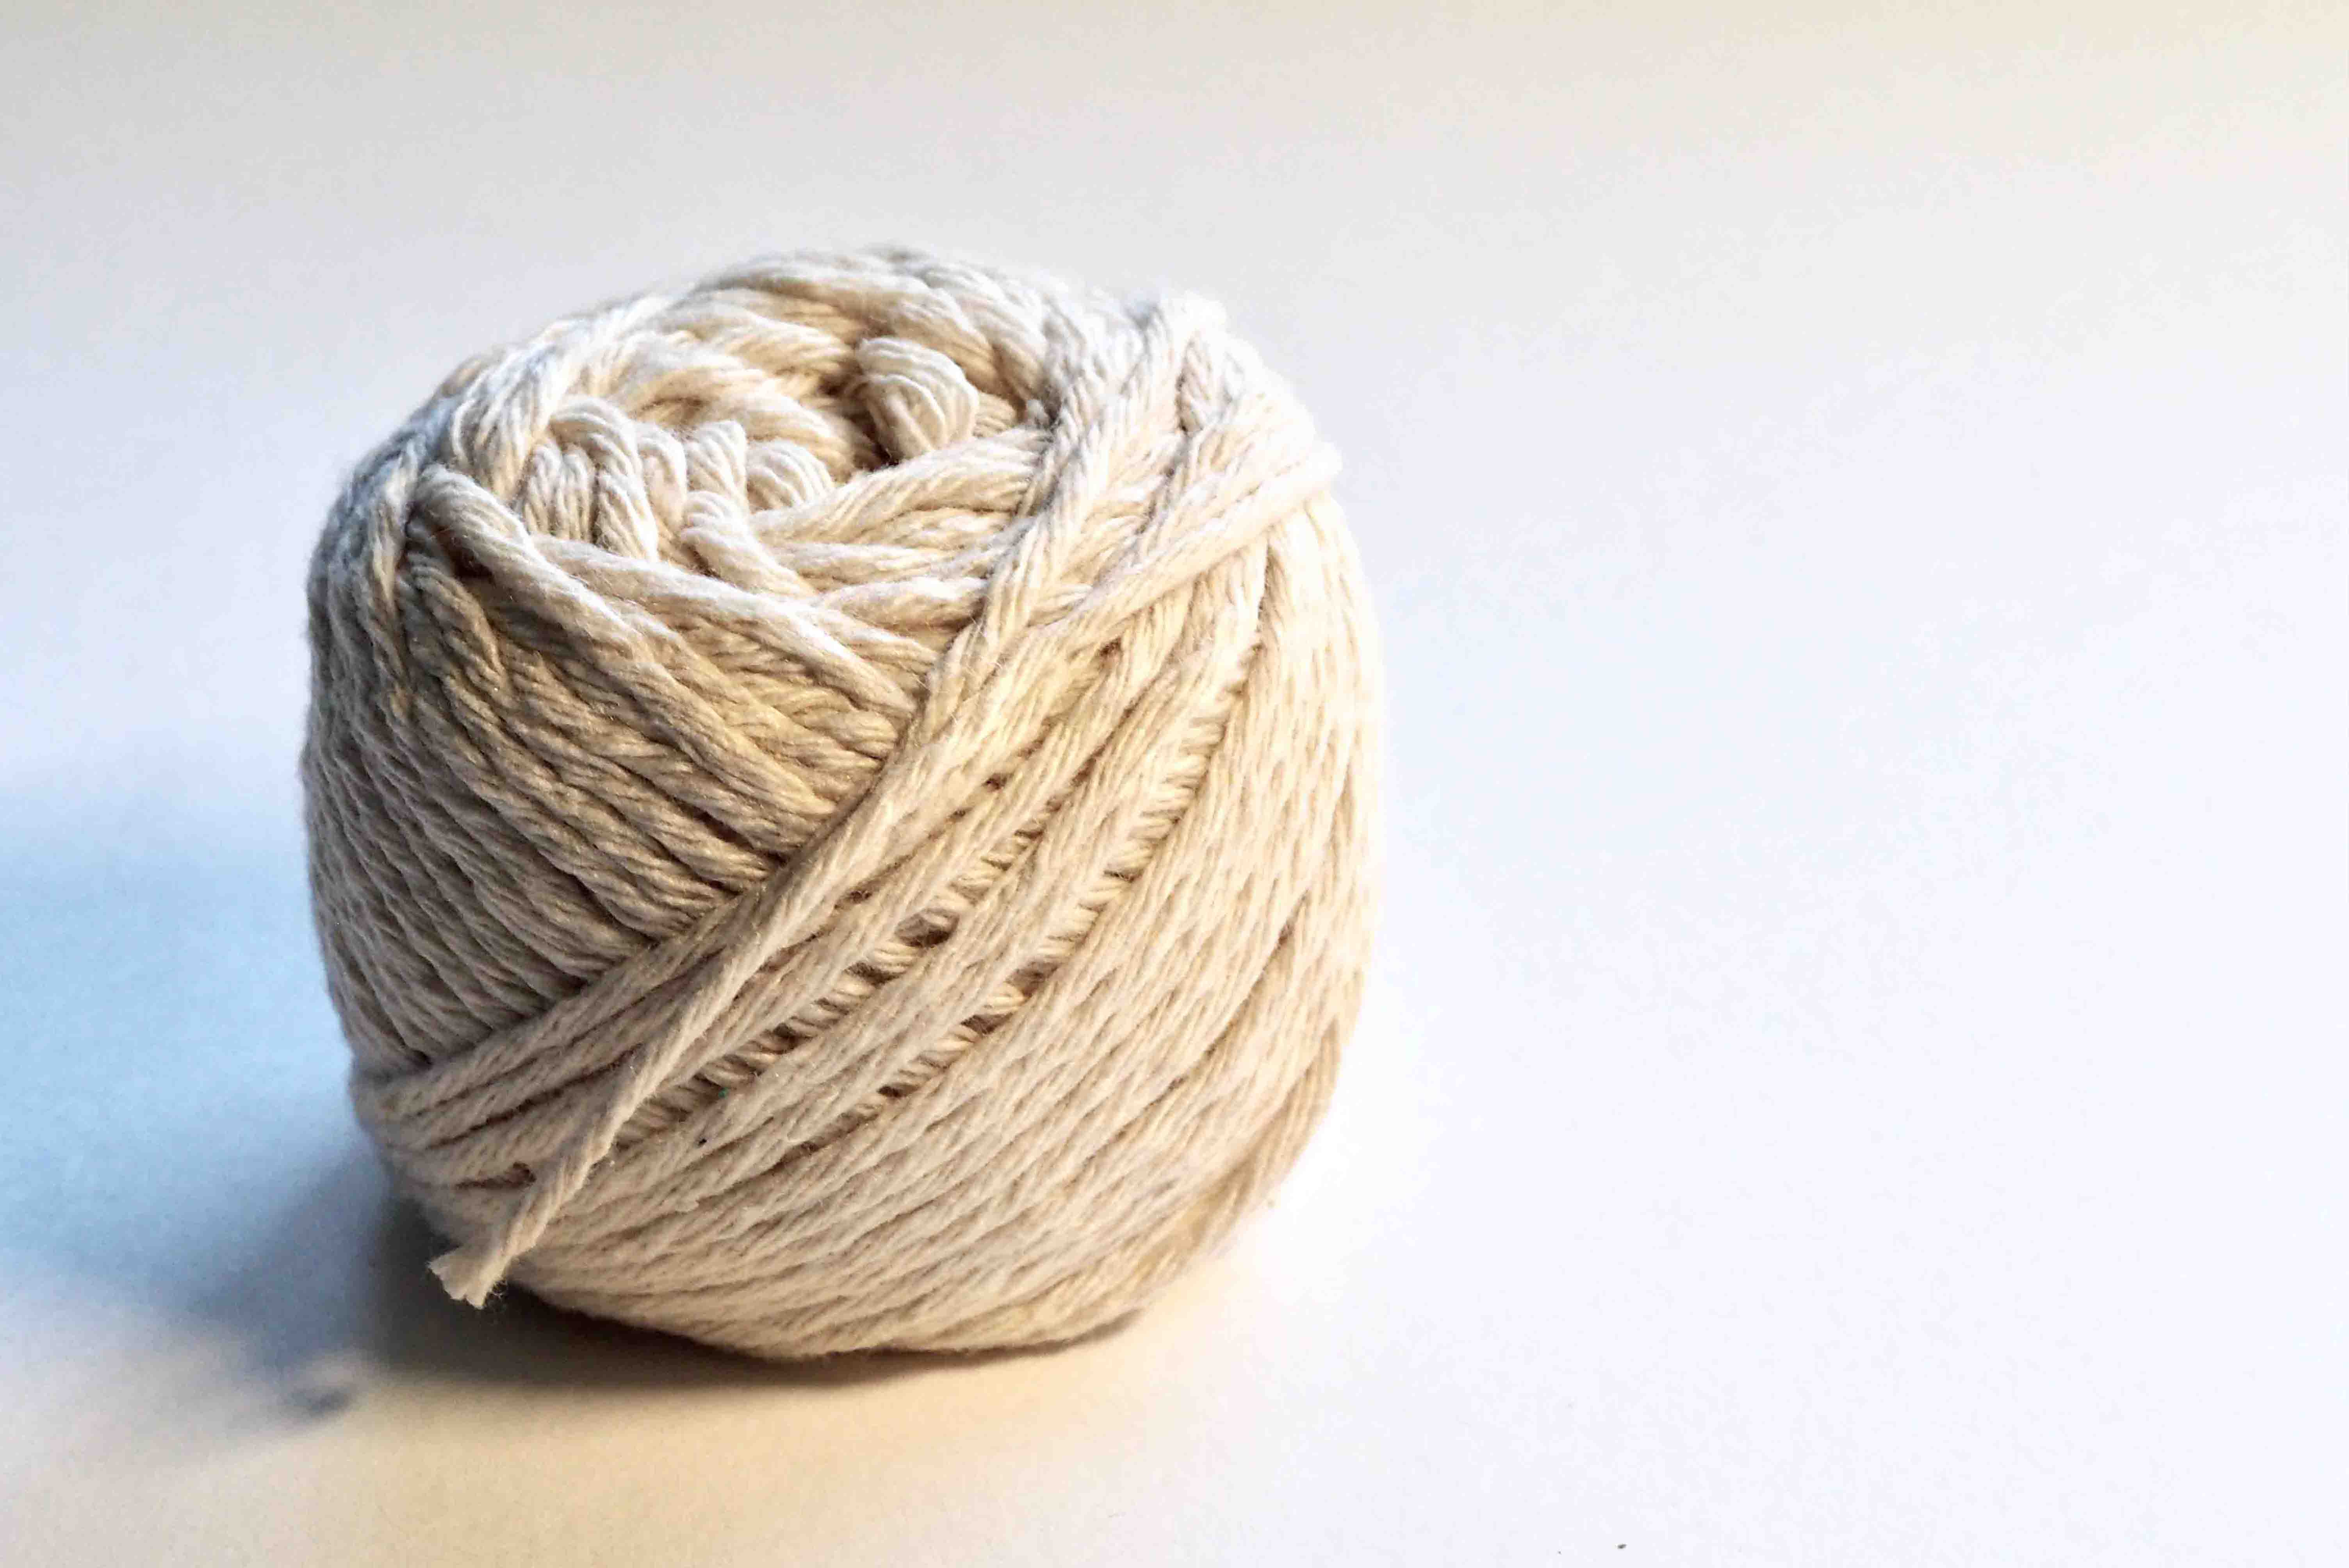 Cotton thread from Handmade-Spinus